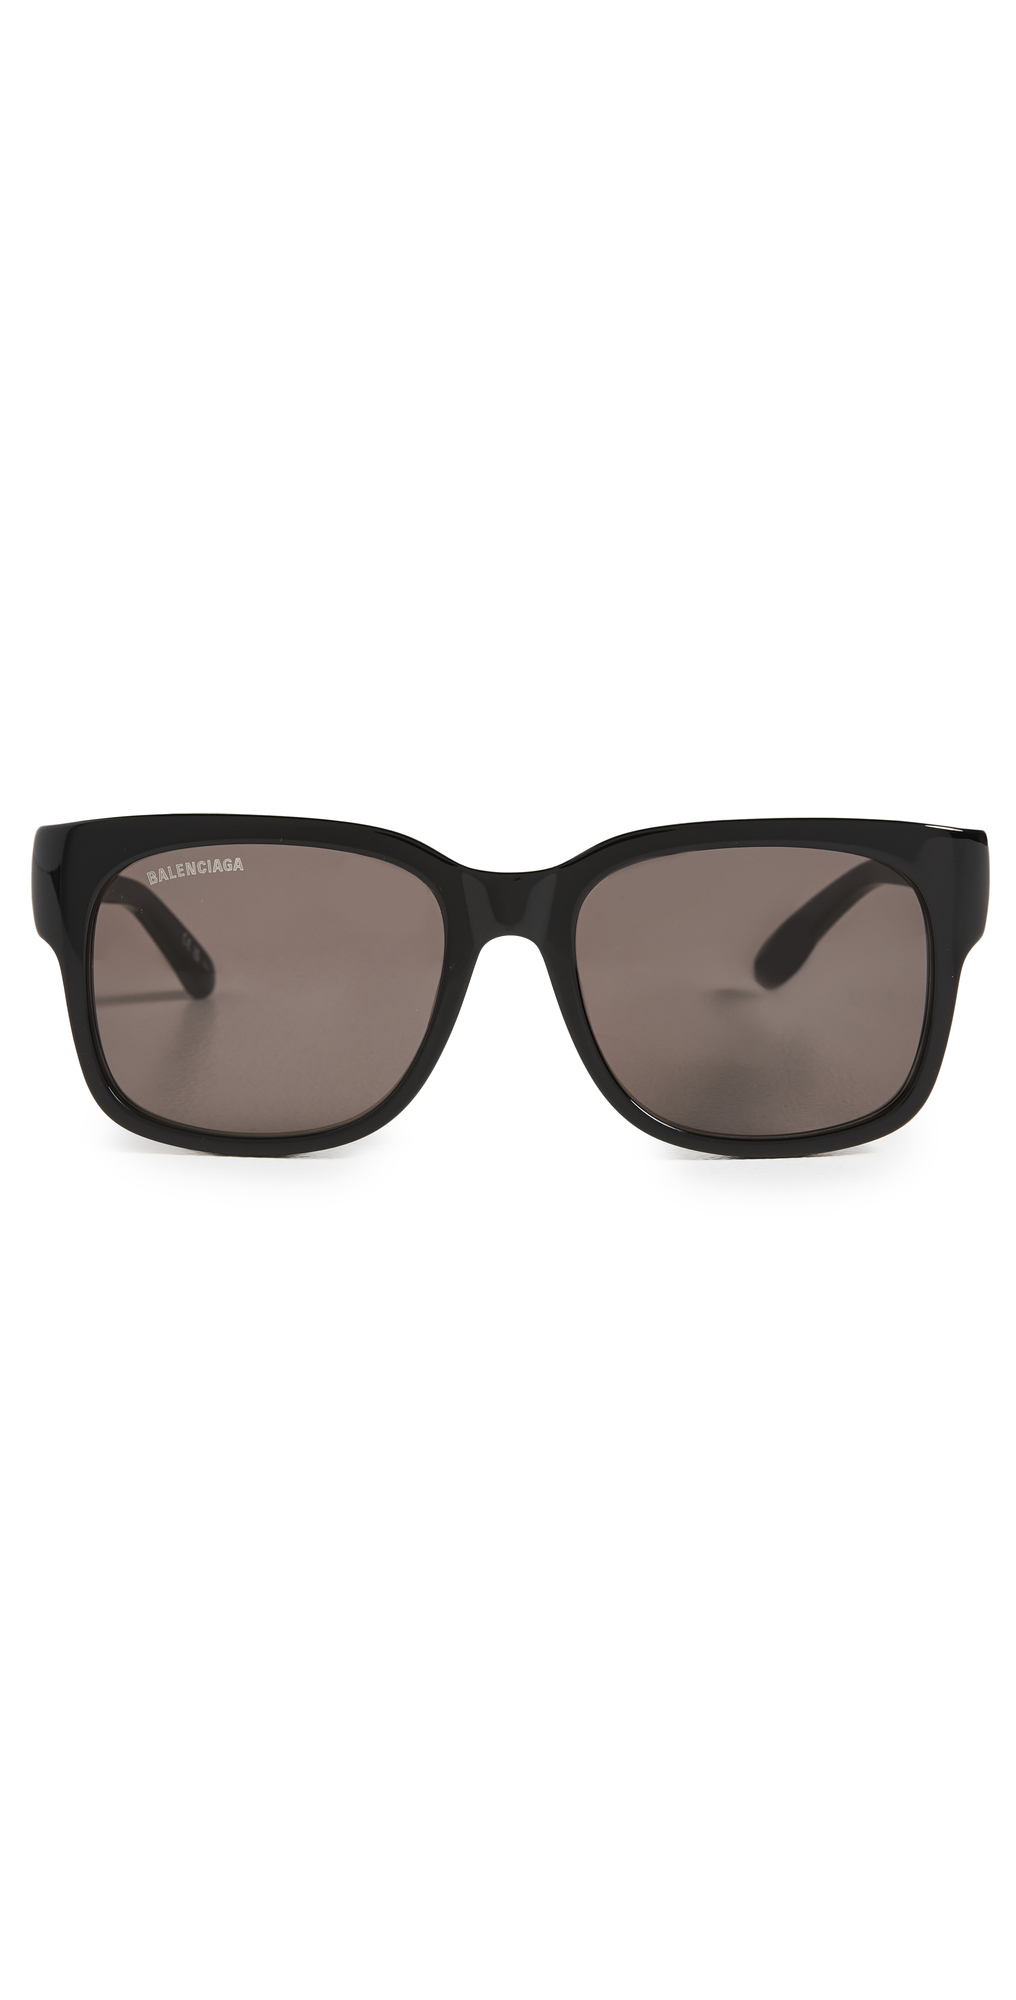 Balenciaga City Sunglasses in black / grey